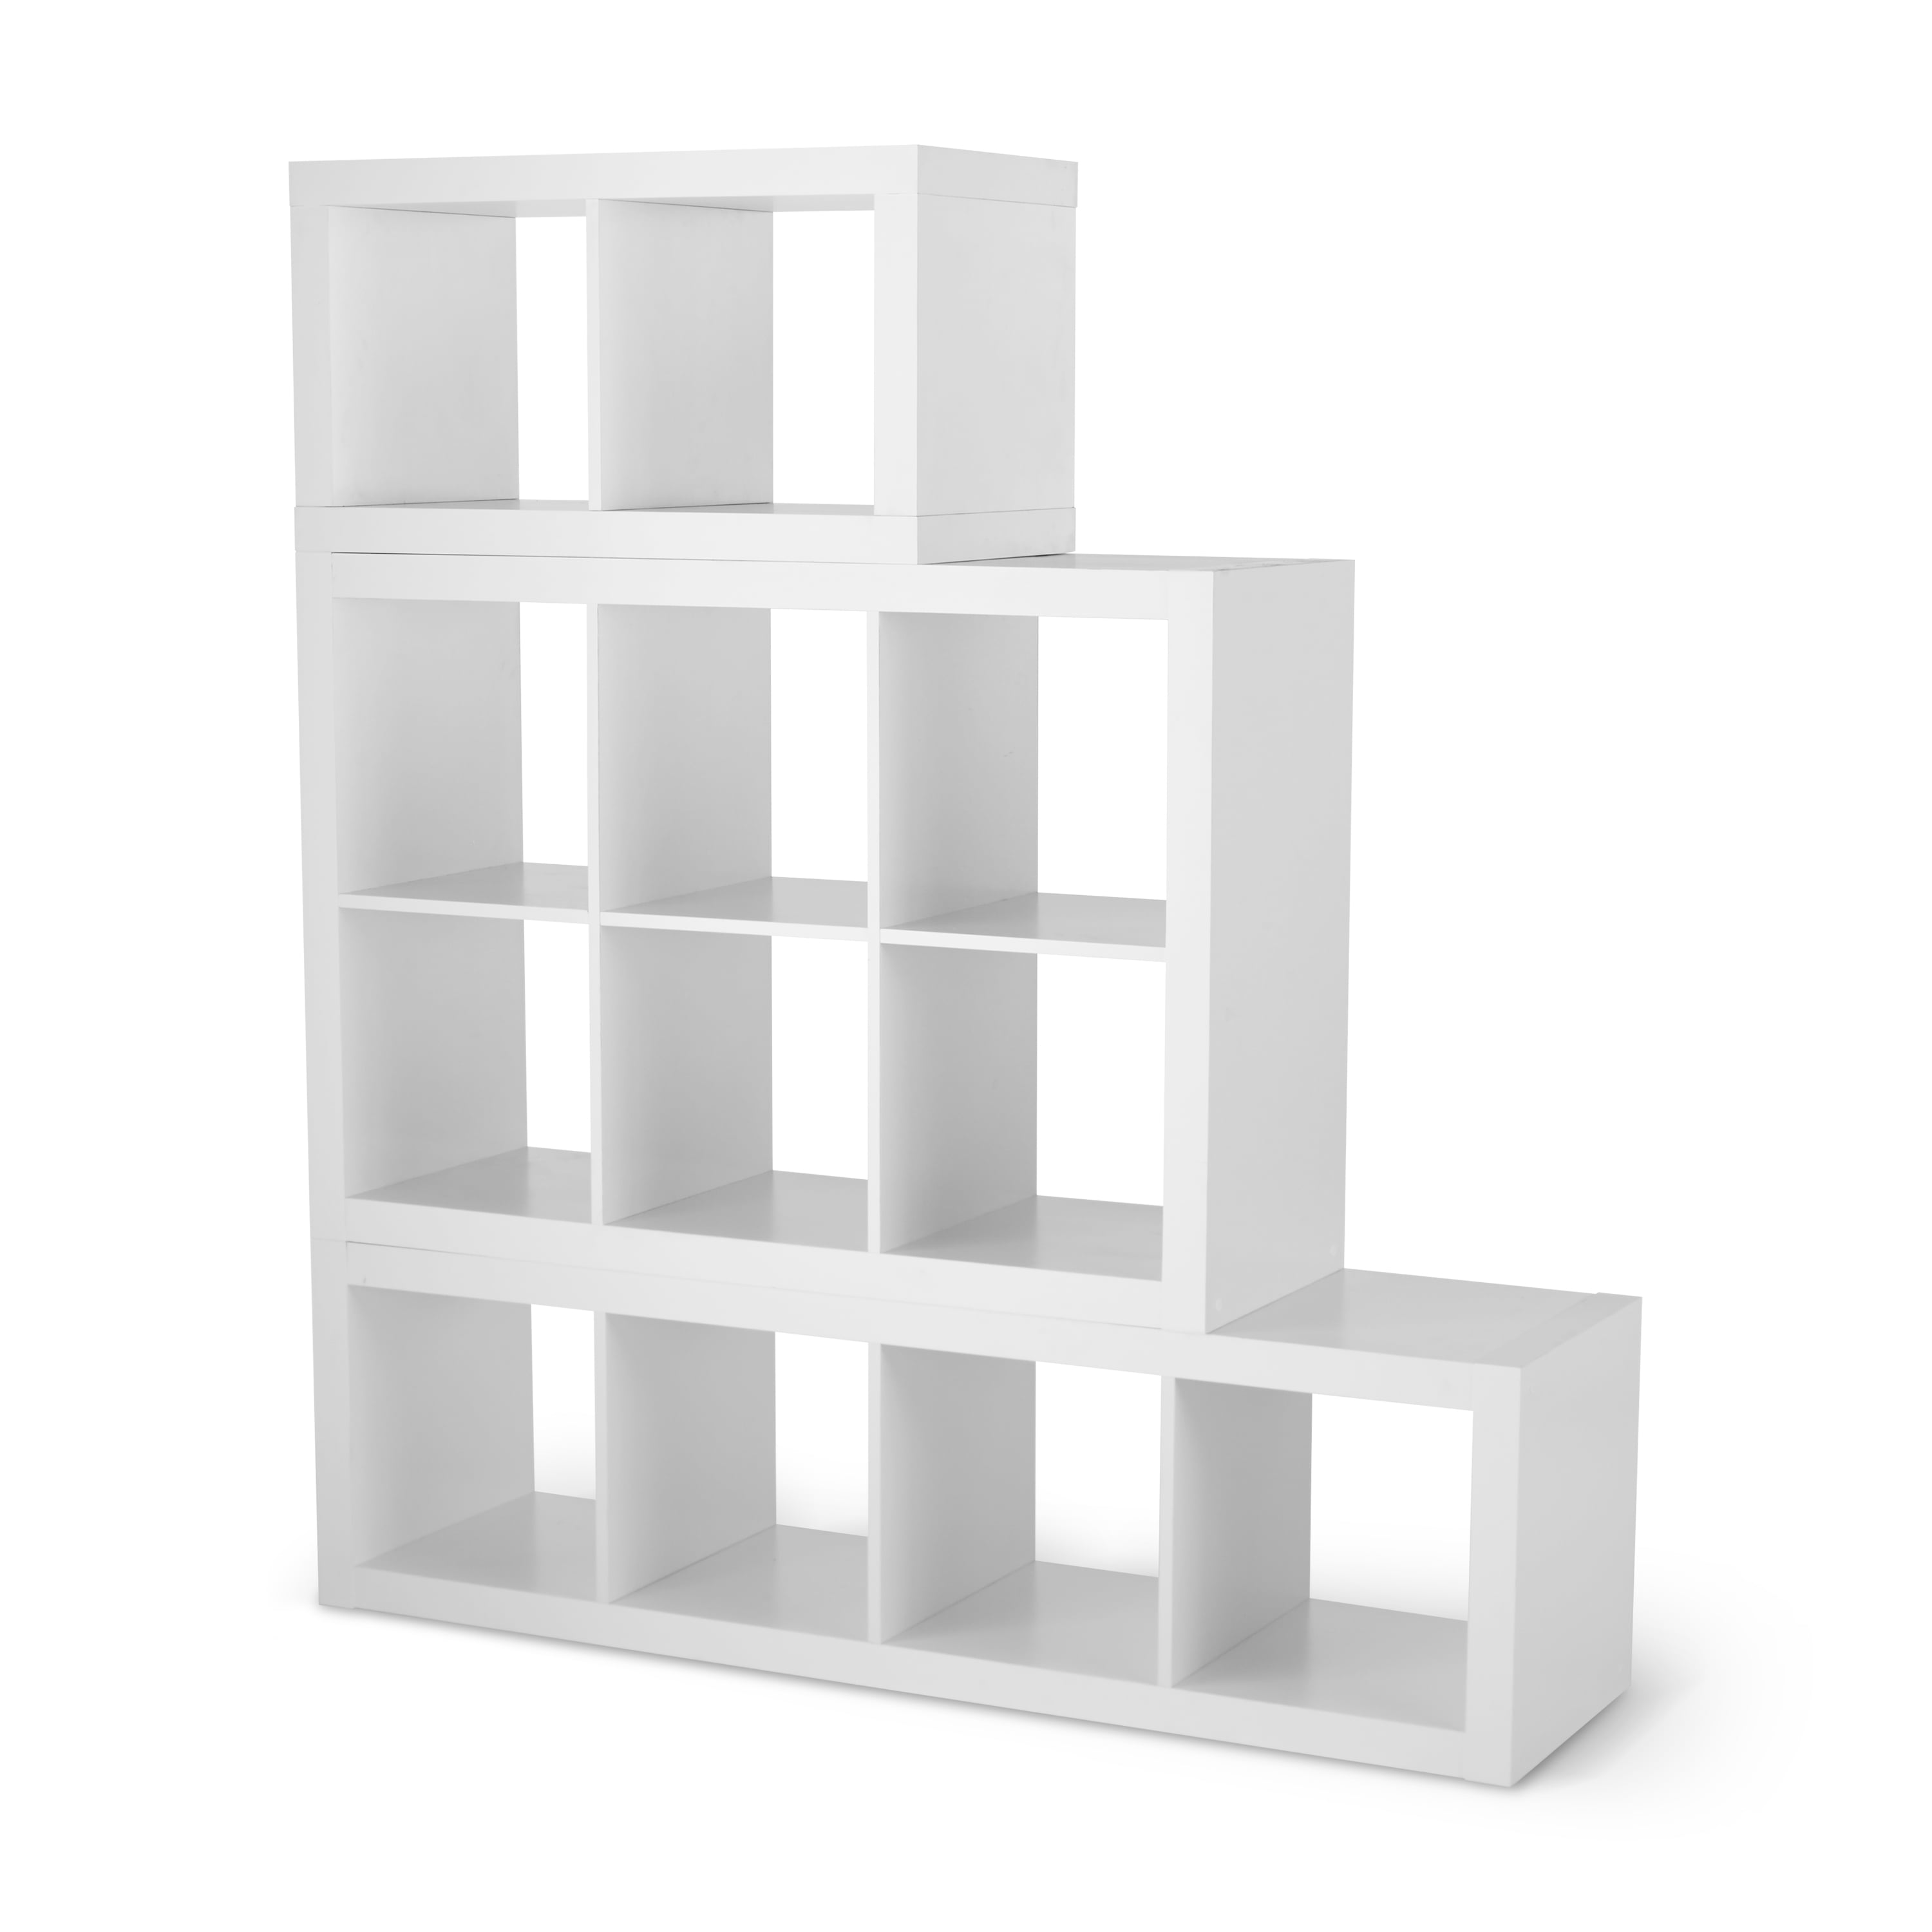 Better Homes & Gardens 2-Cube Storage Organizer, Natural 